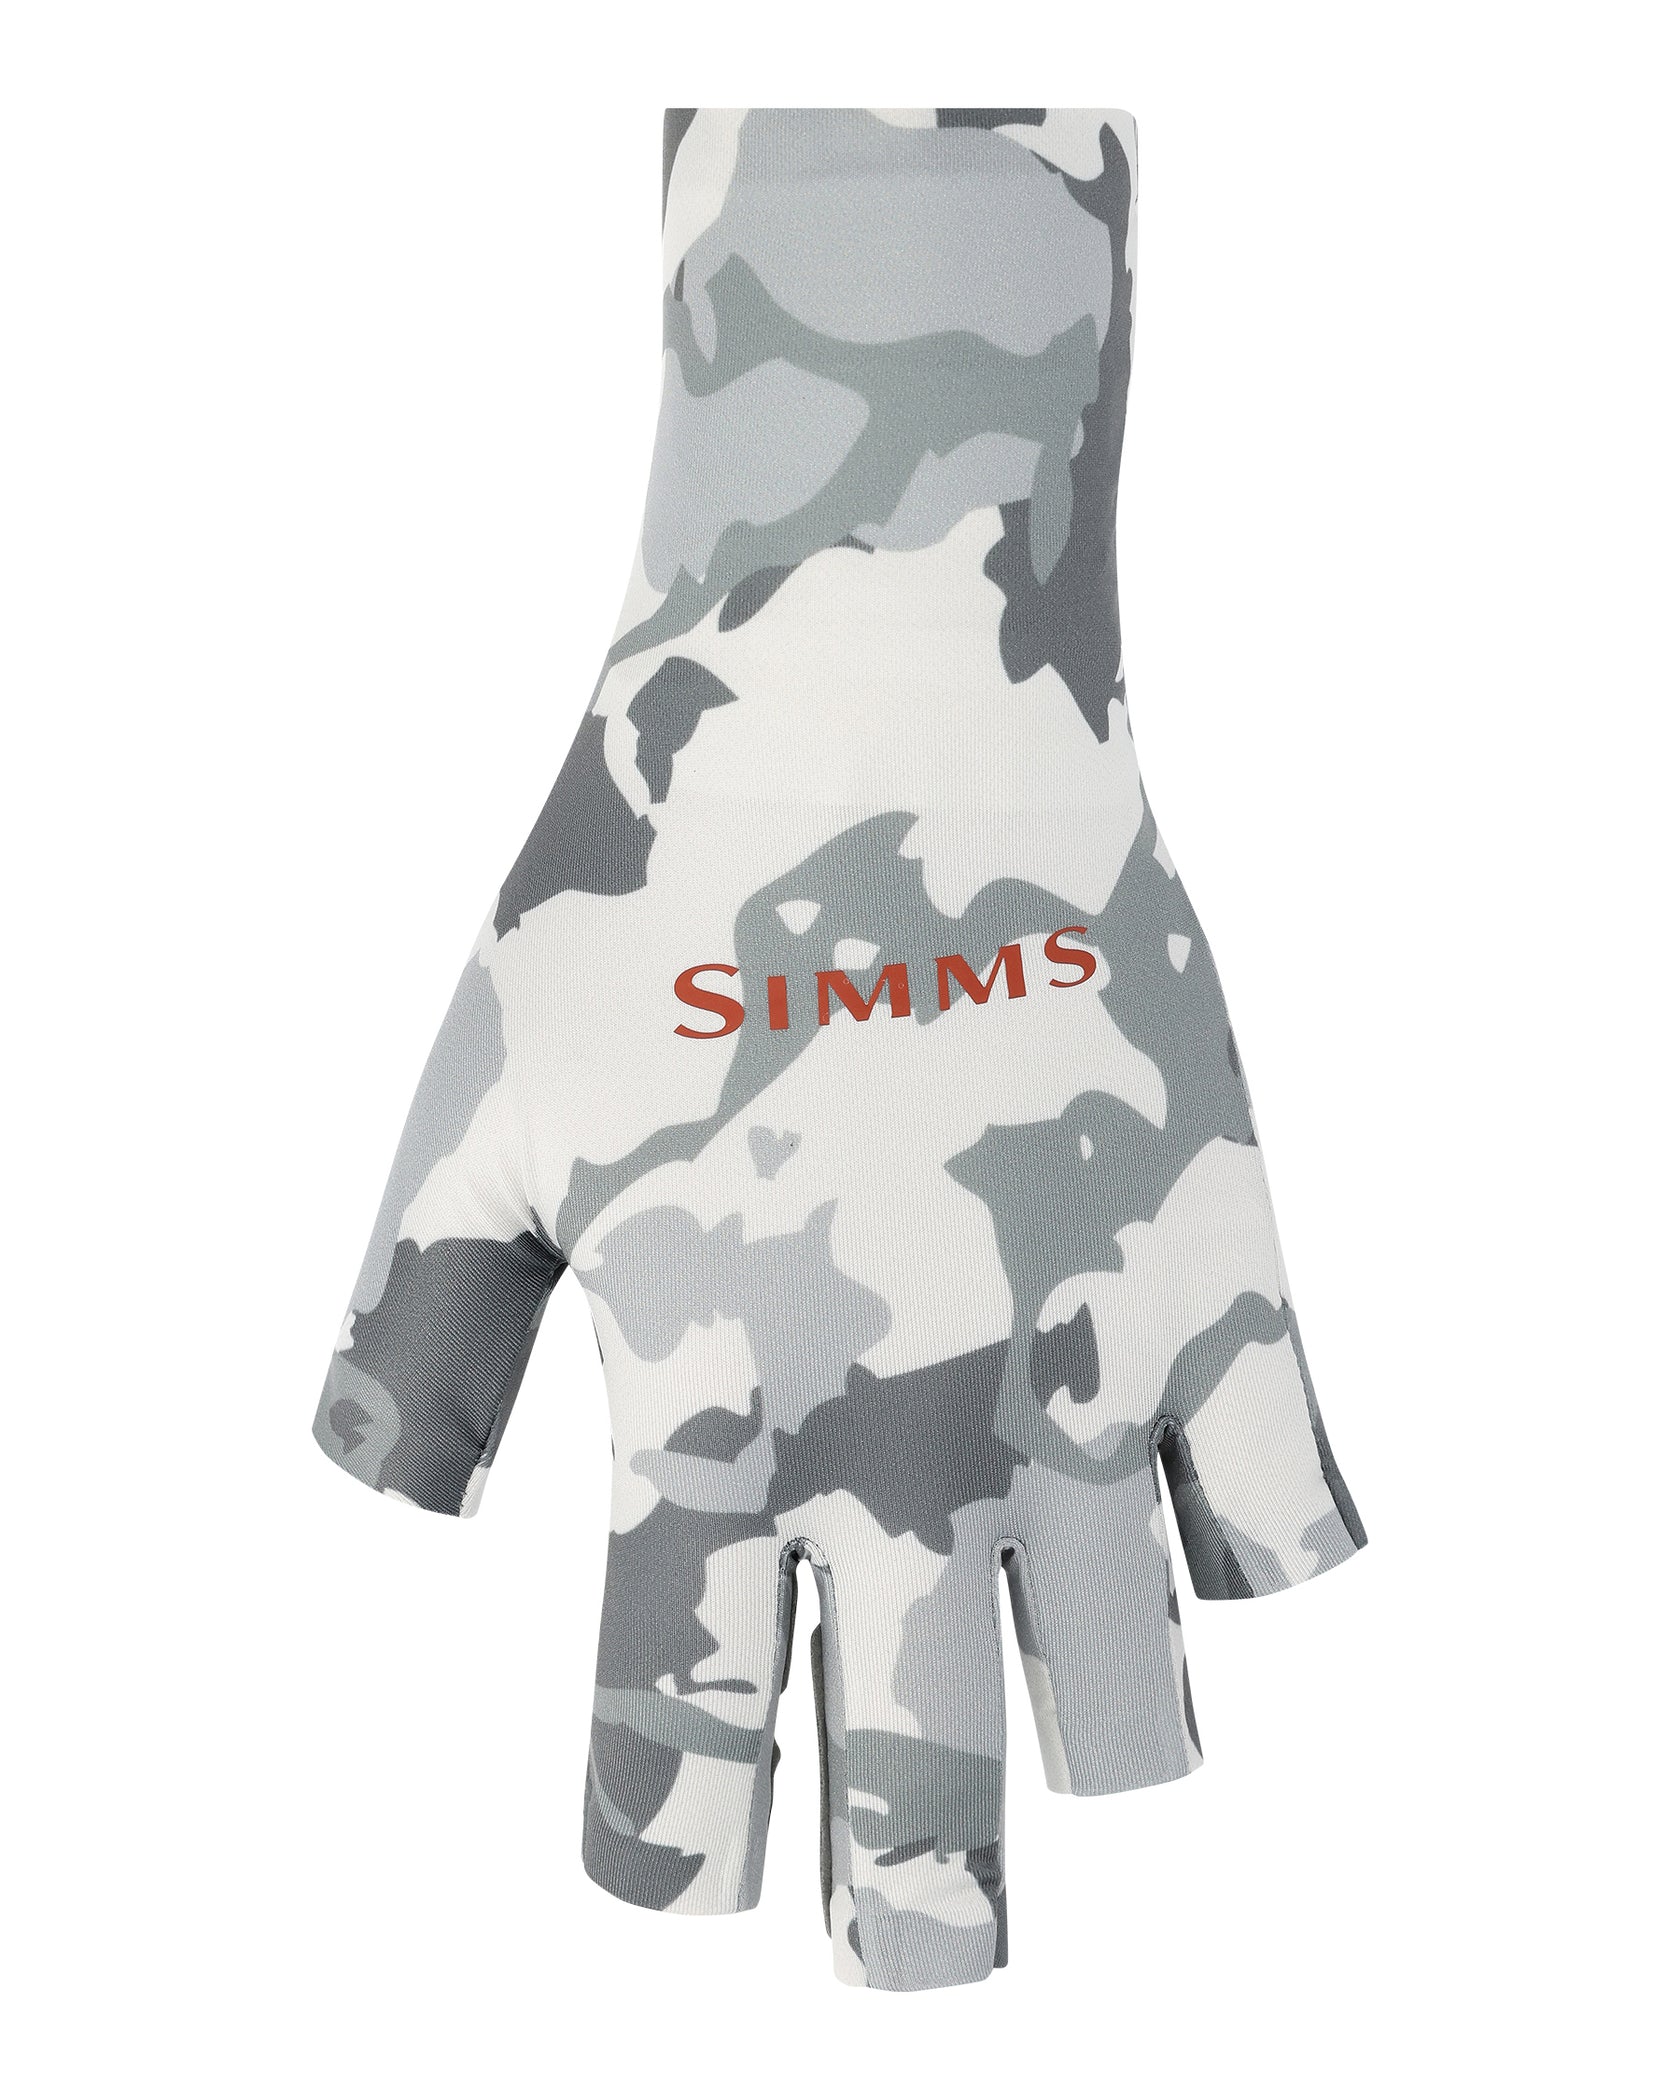 Simms SolarFlex SunGlove - Regiment Camo Cinder - Medium